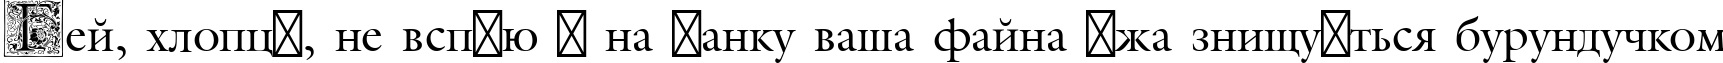 Пример написания шрифтом Medieval Initial Two текста на украинском